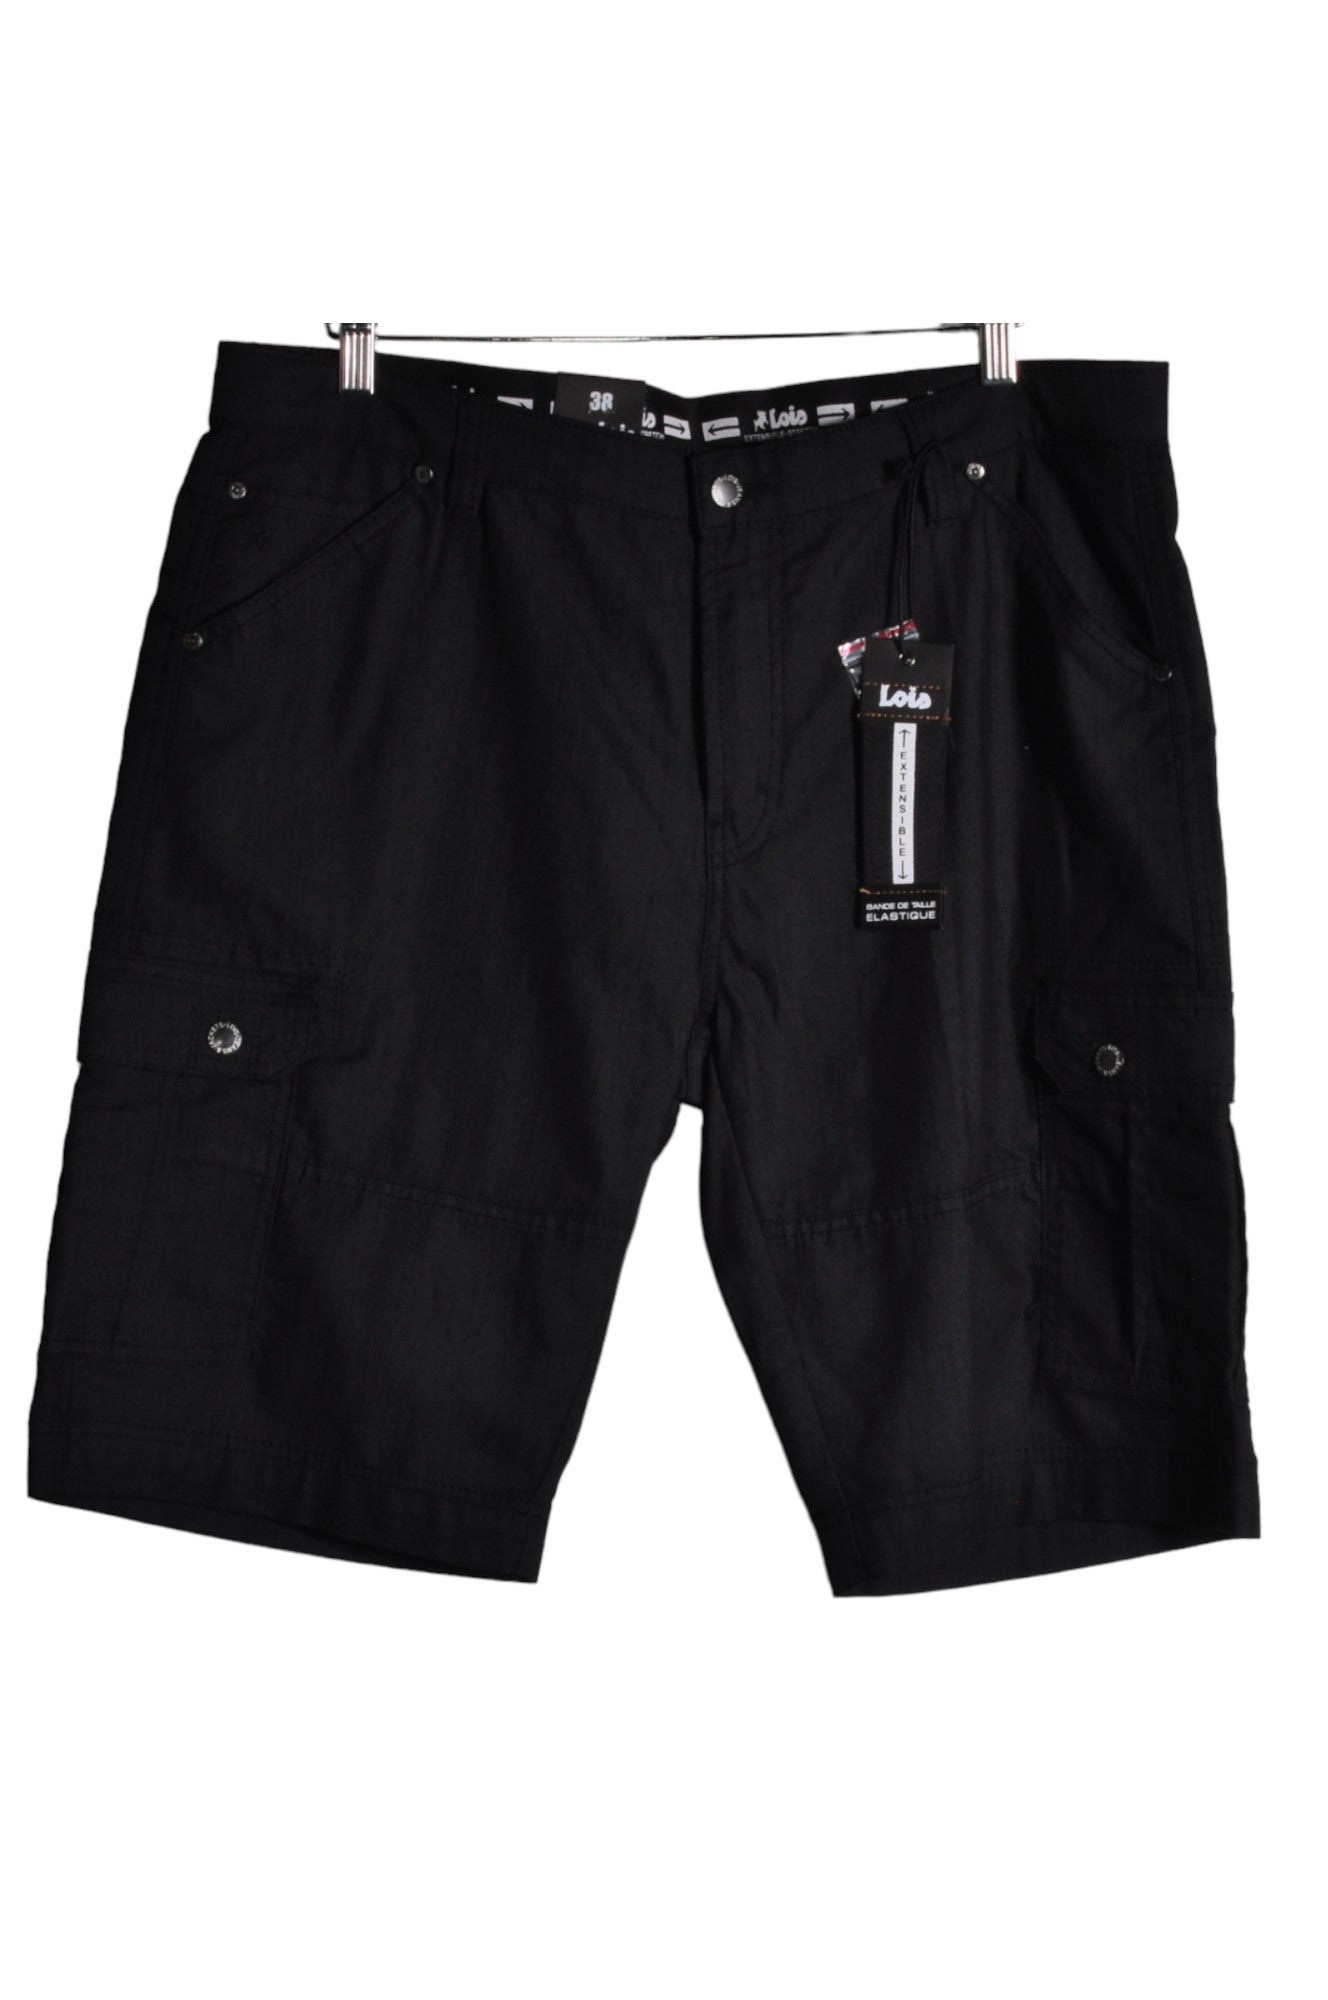 LOIS Men Classic Shorts Regular fit in Black - Size 38 | 35 $ KOOP